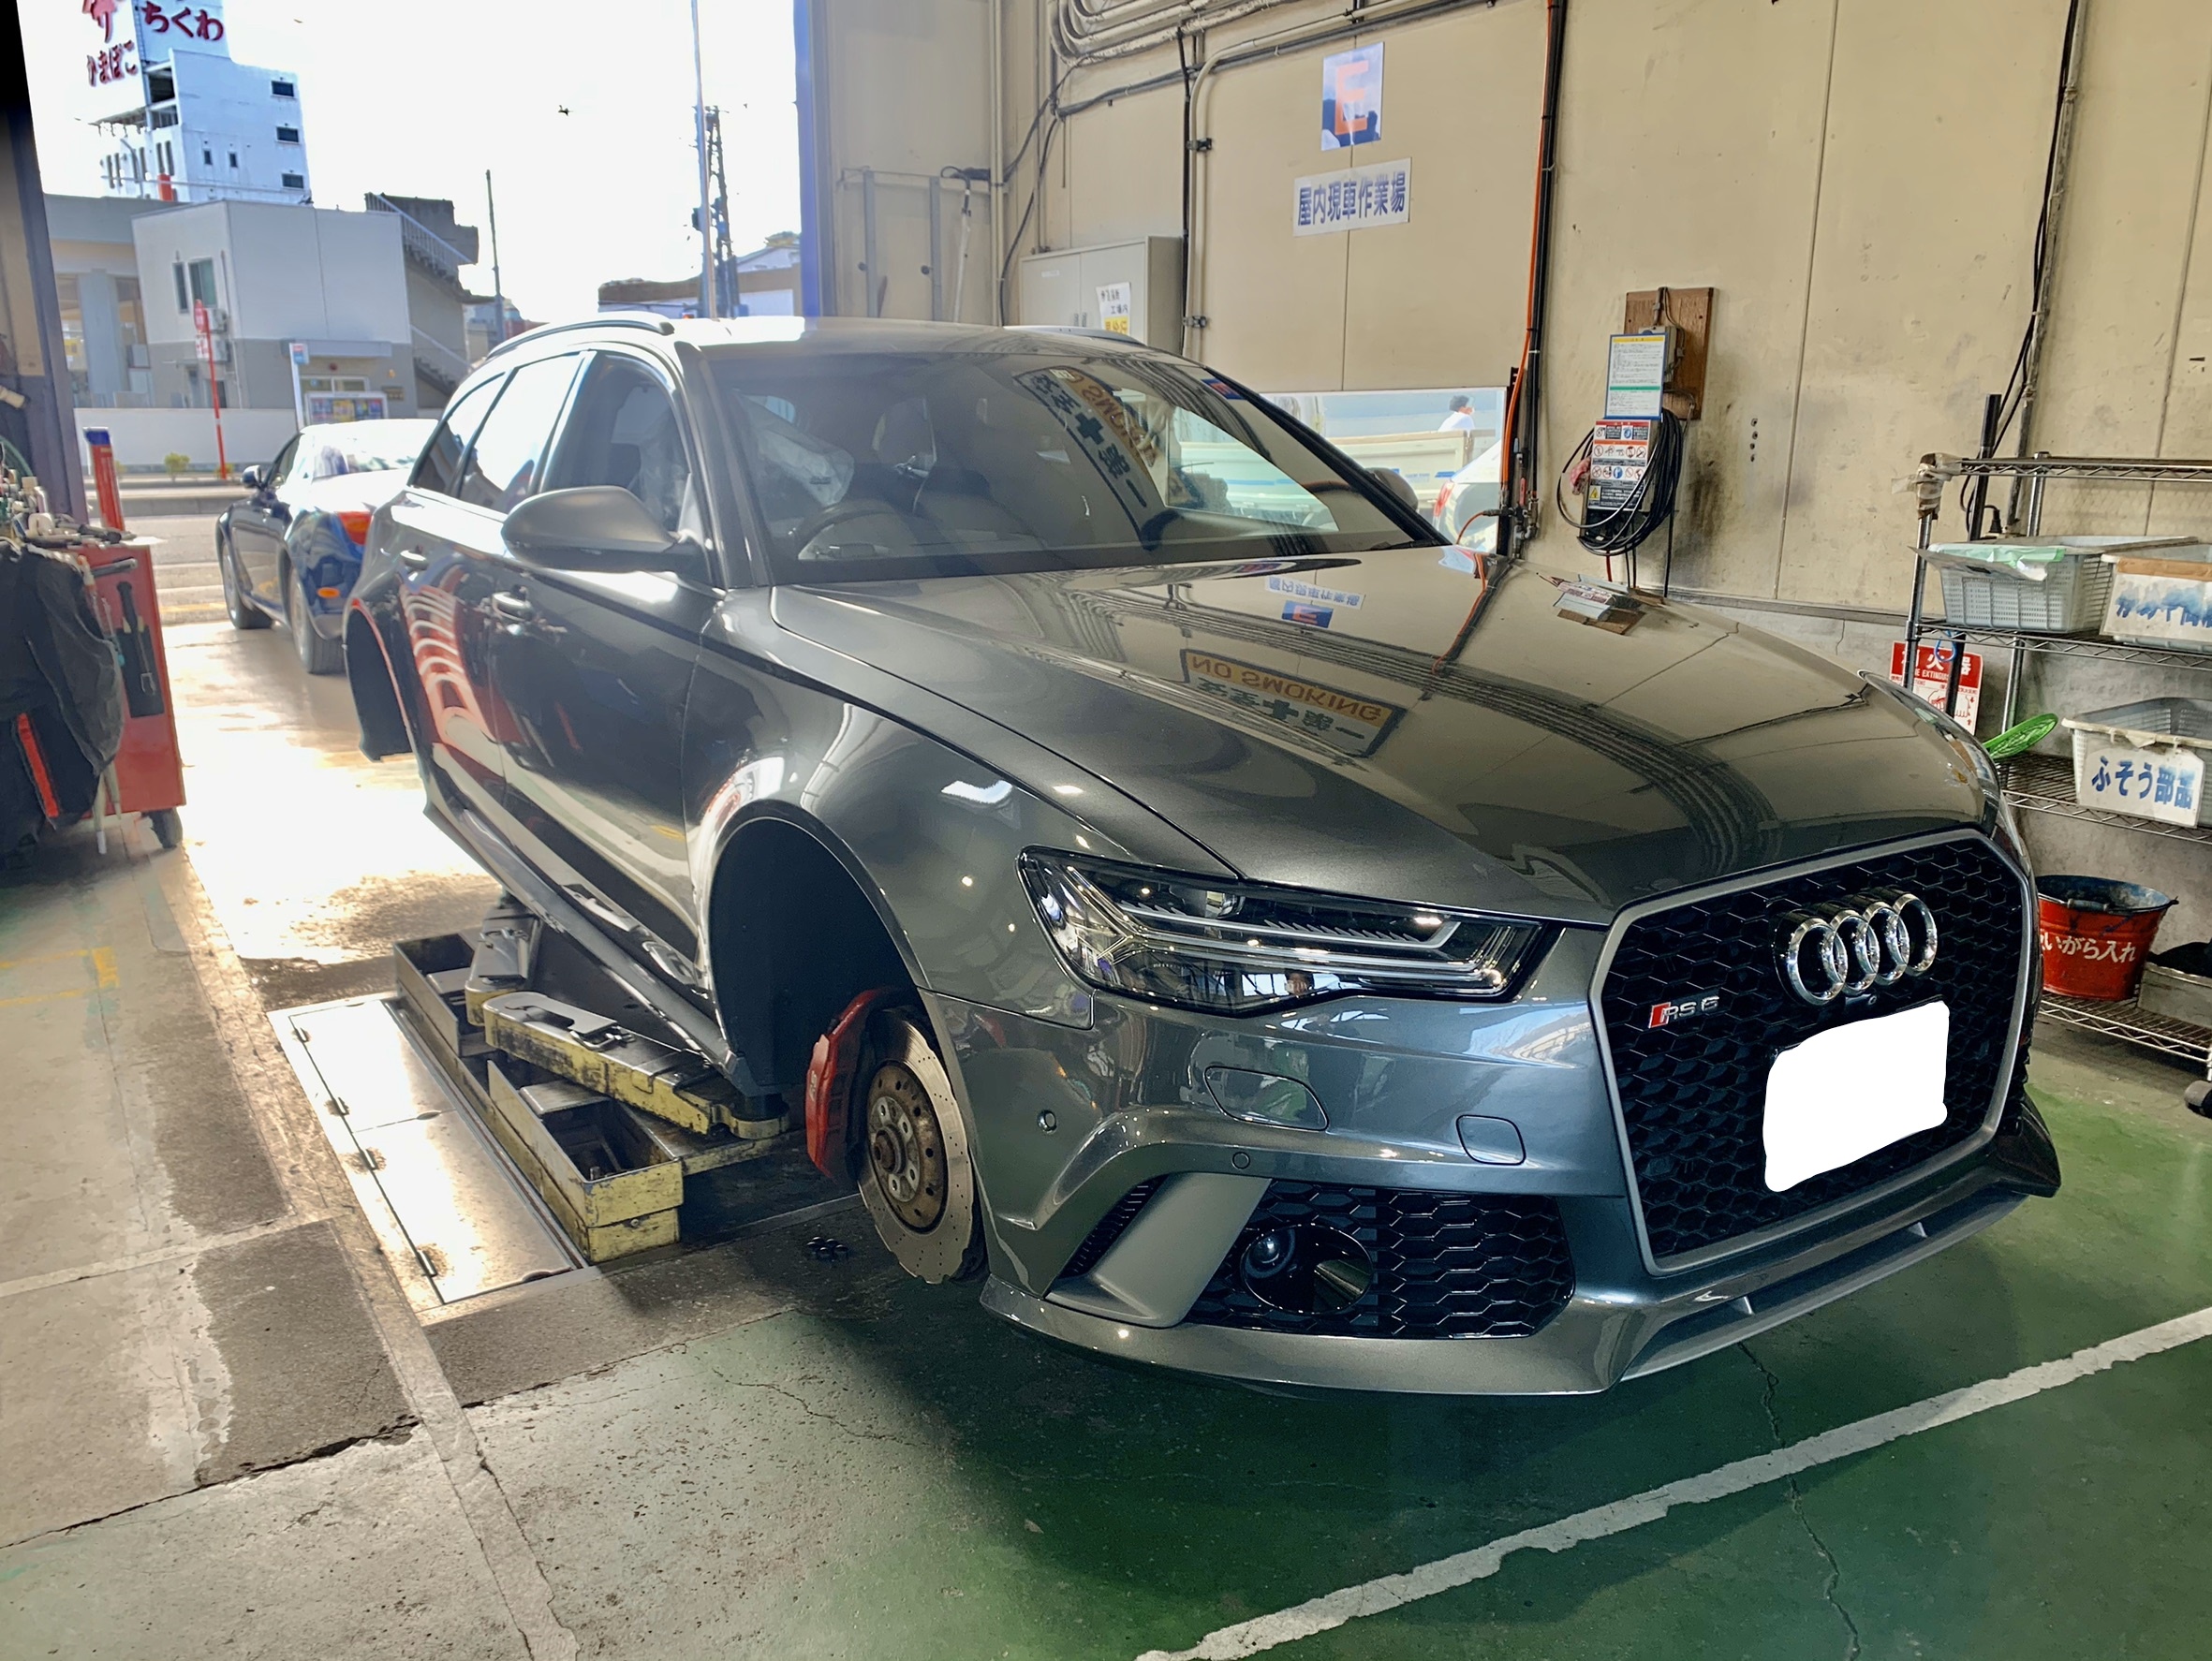 Audi Rs6 Avant タイヤ交換 姫路市 新車 車検 修理 板金 取付お任せください 中央自動車工業株式会社